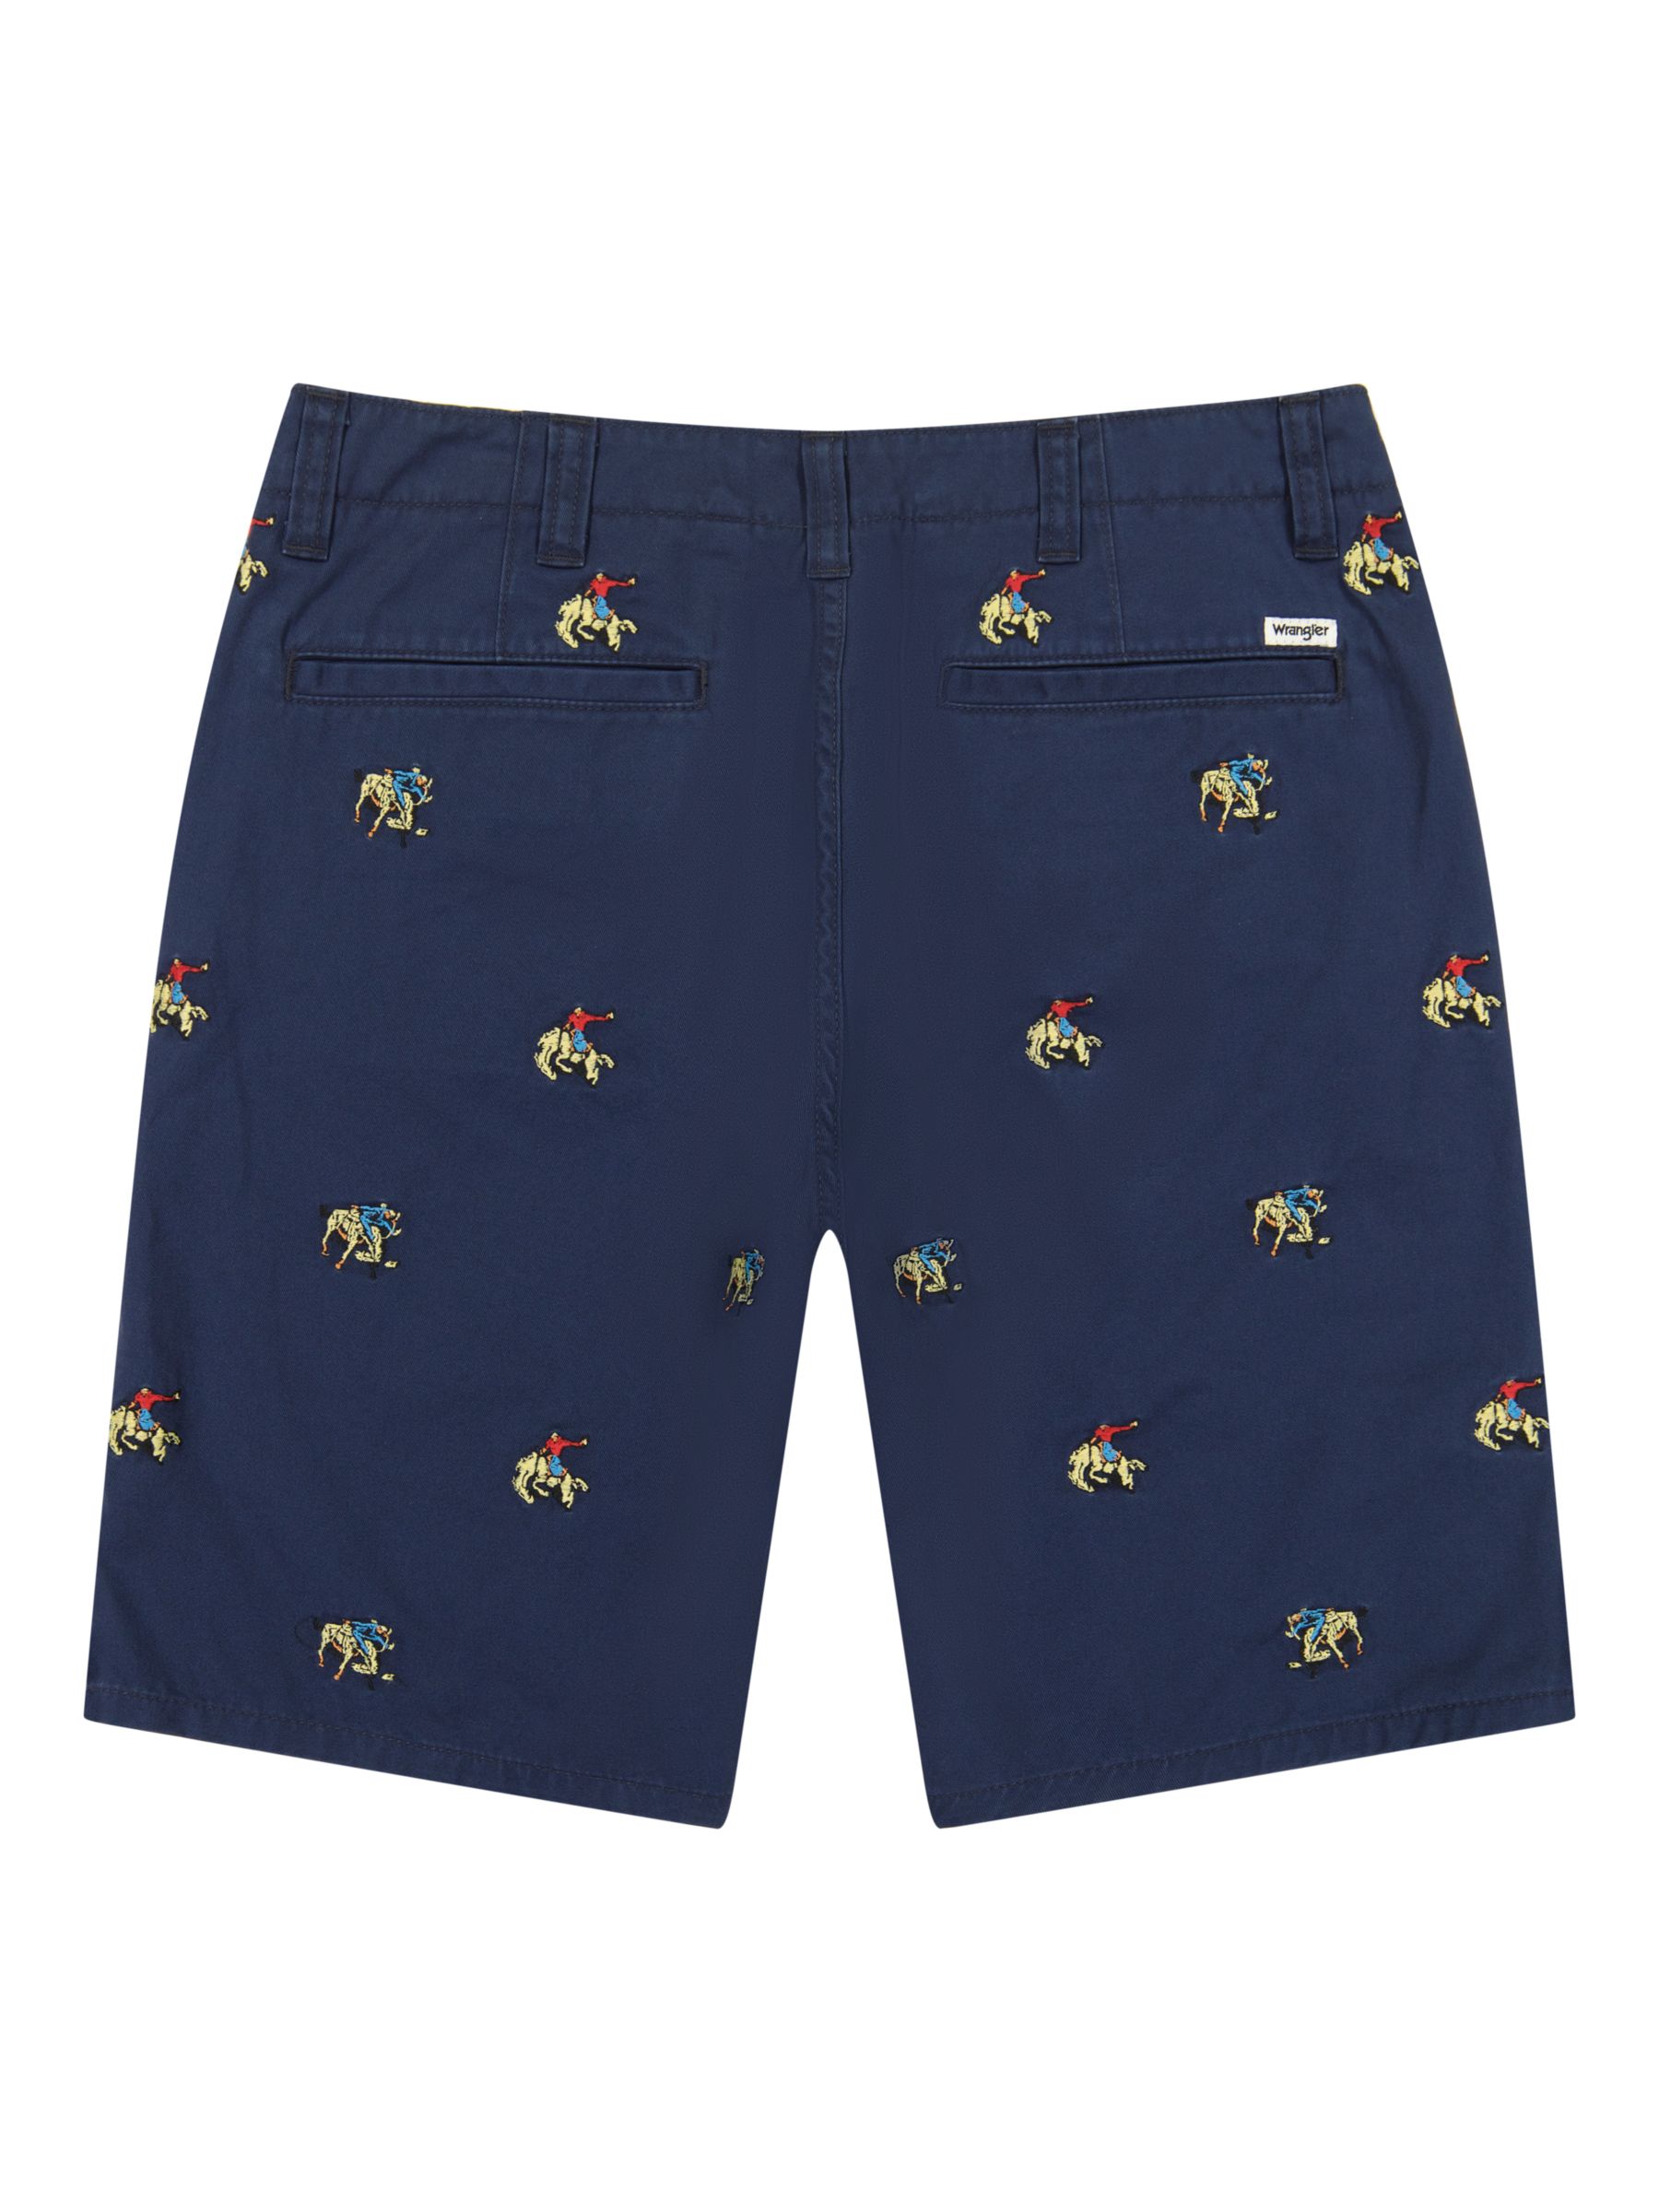 Wrangler Critter Chino Shorts, Dark Navy, 30R